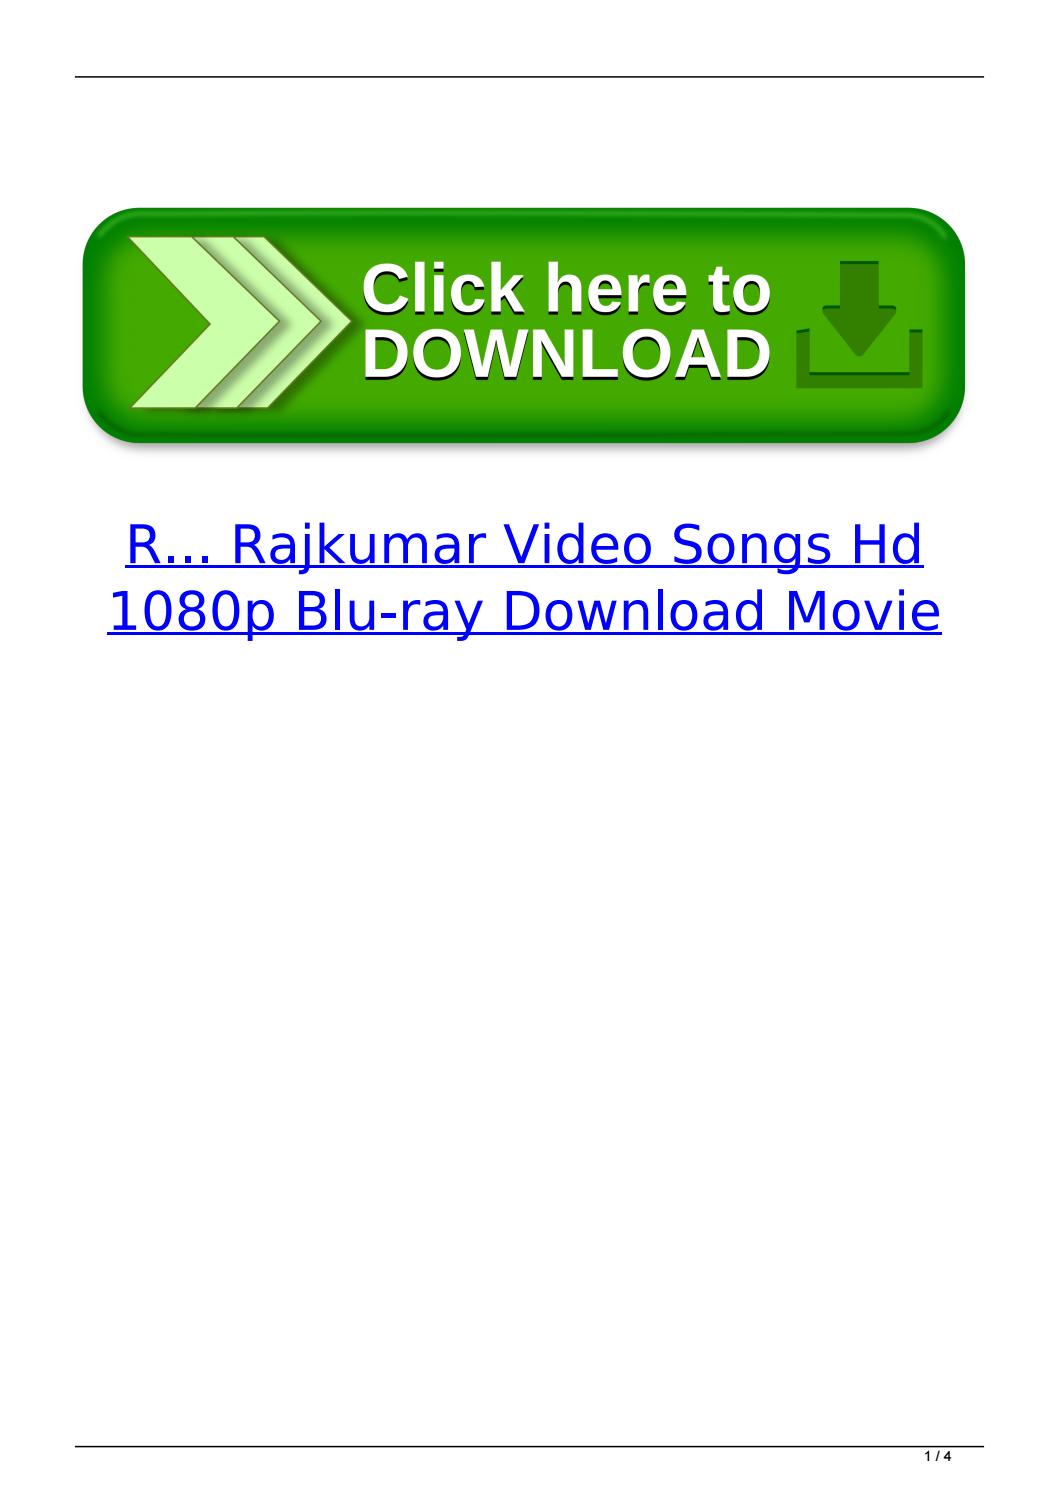 1080p Transformers 4 Hindi Full Movie 3gp